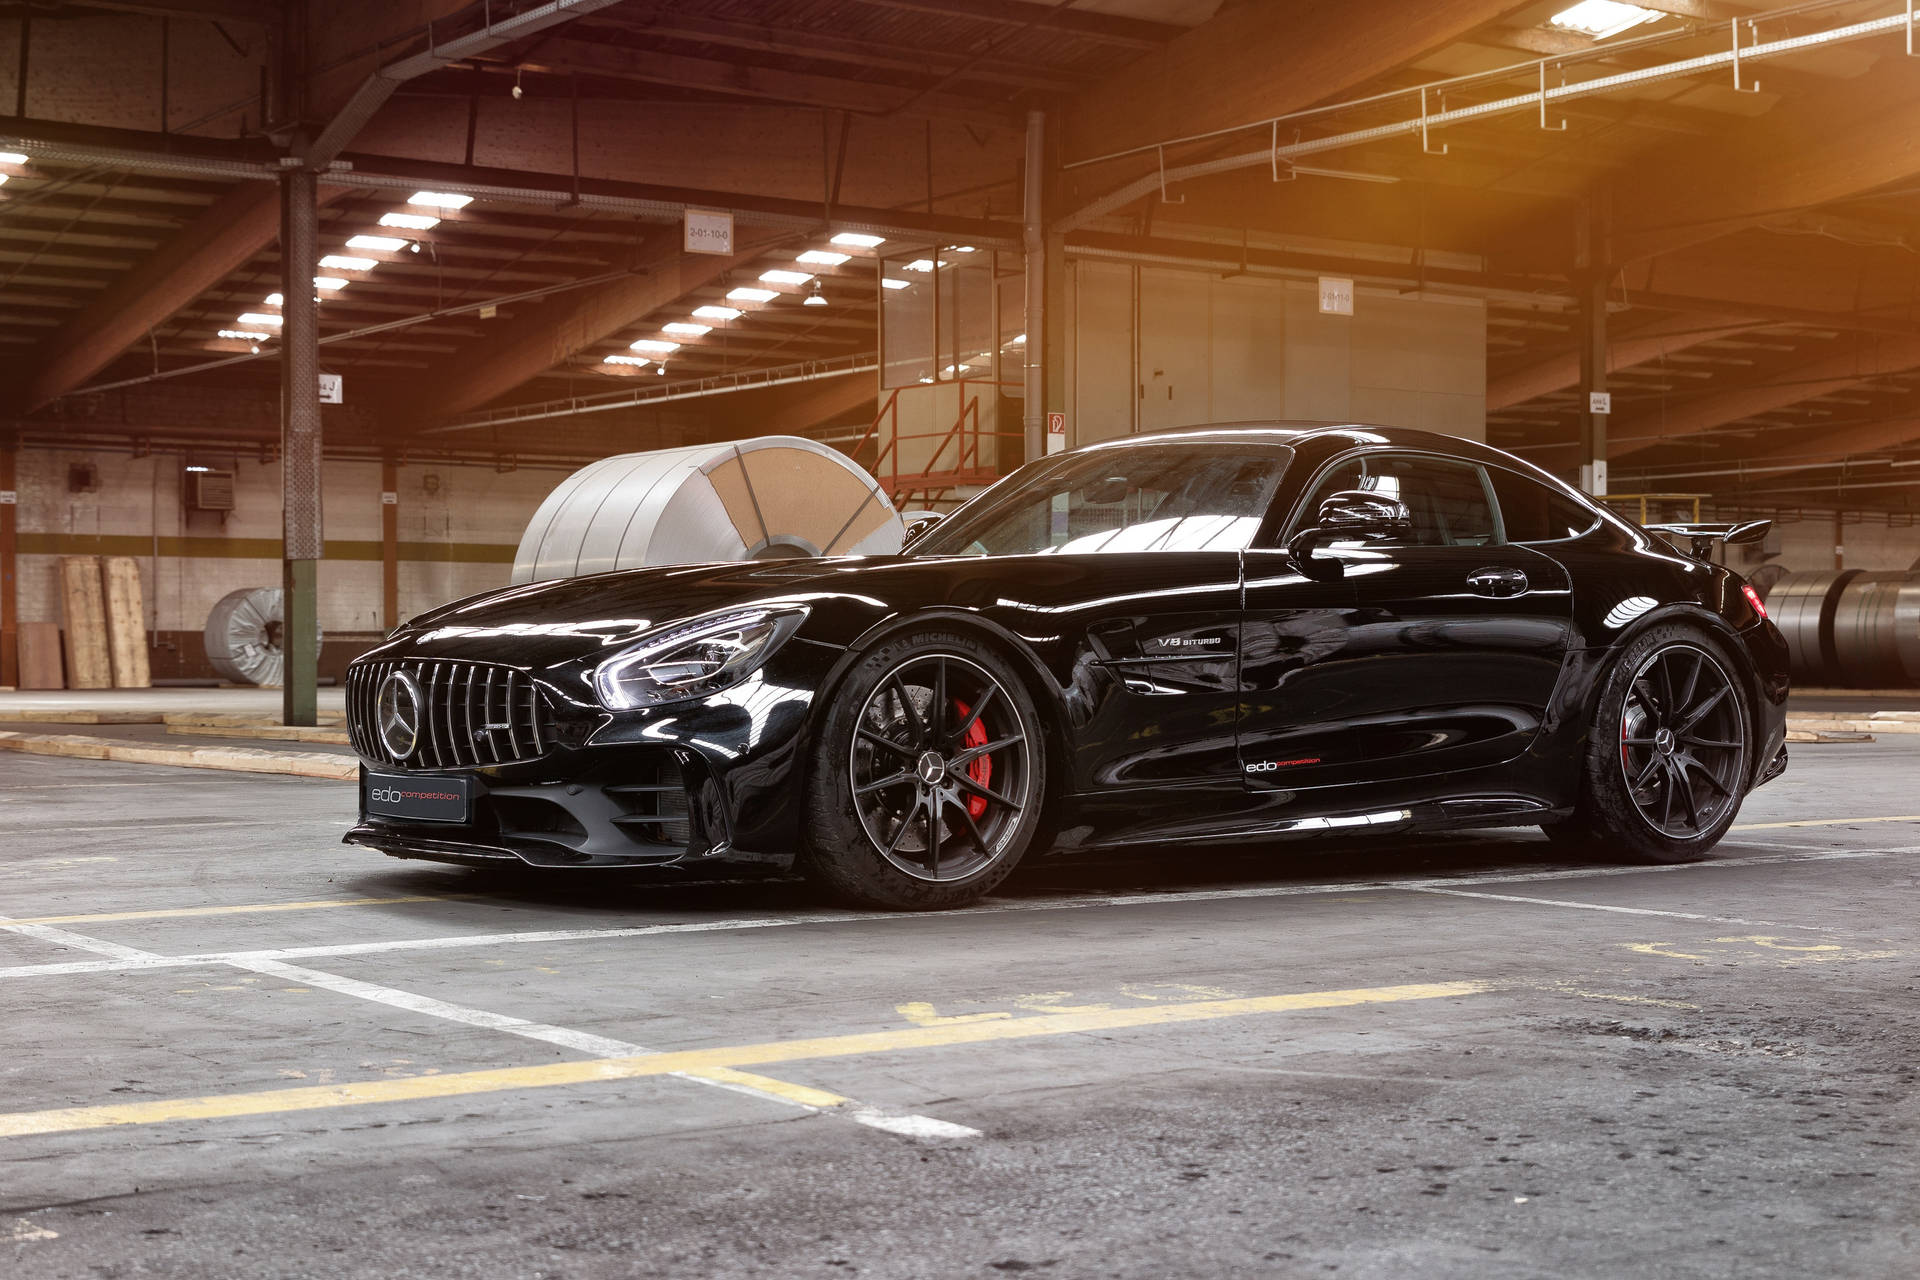 Caption: Majestic Black Mercedes AMG GT R Showcasing Power and Elegance Wallpaper